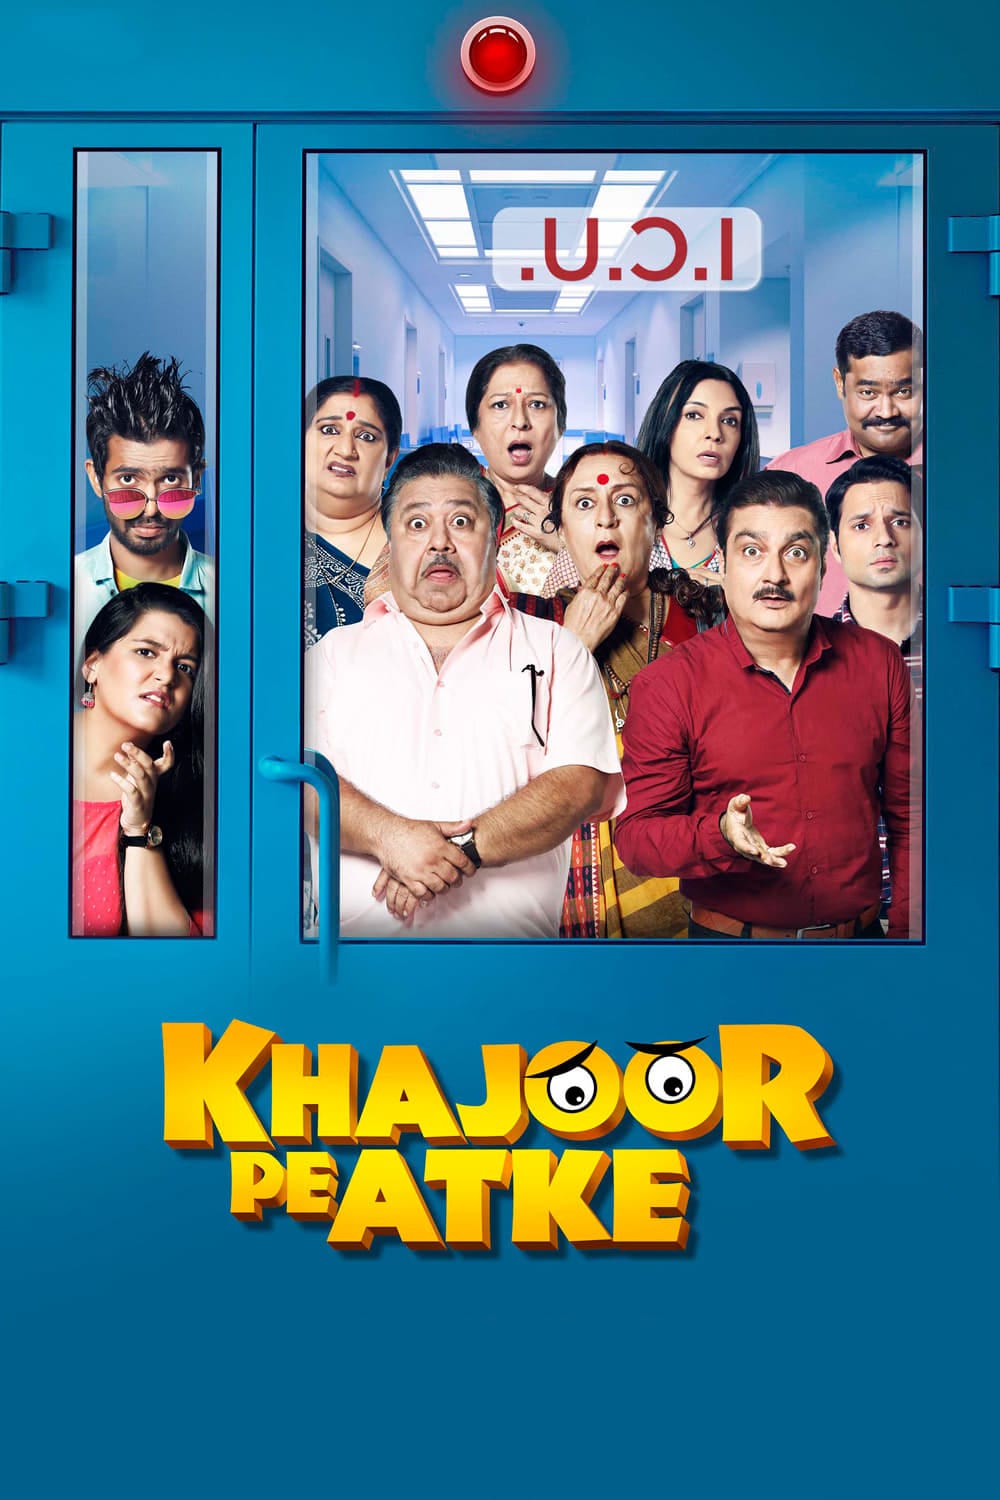 Poster for the movie "Khajoor Pe Atke"